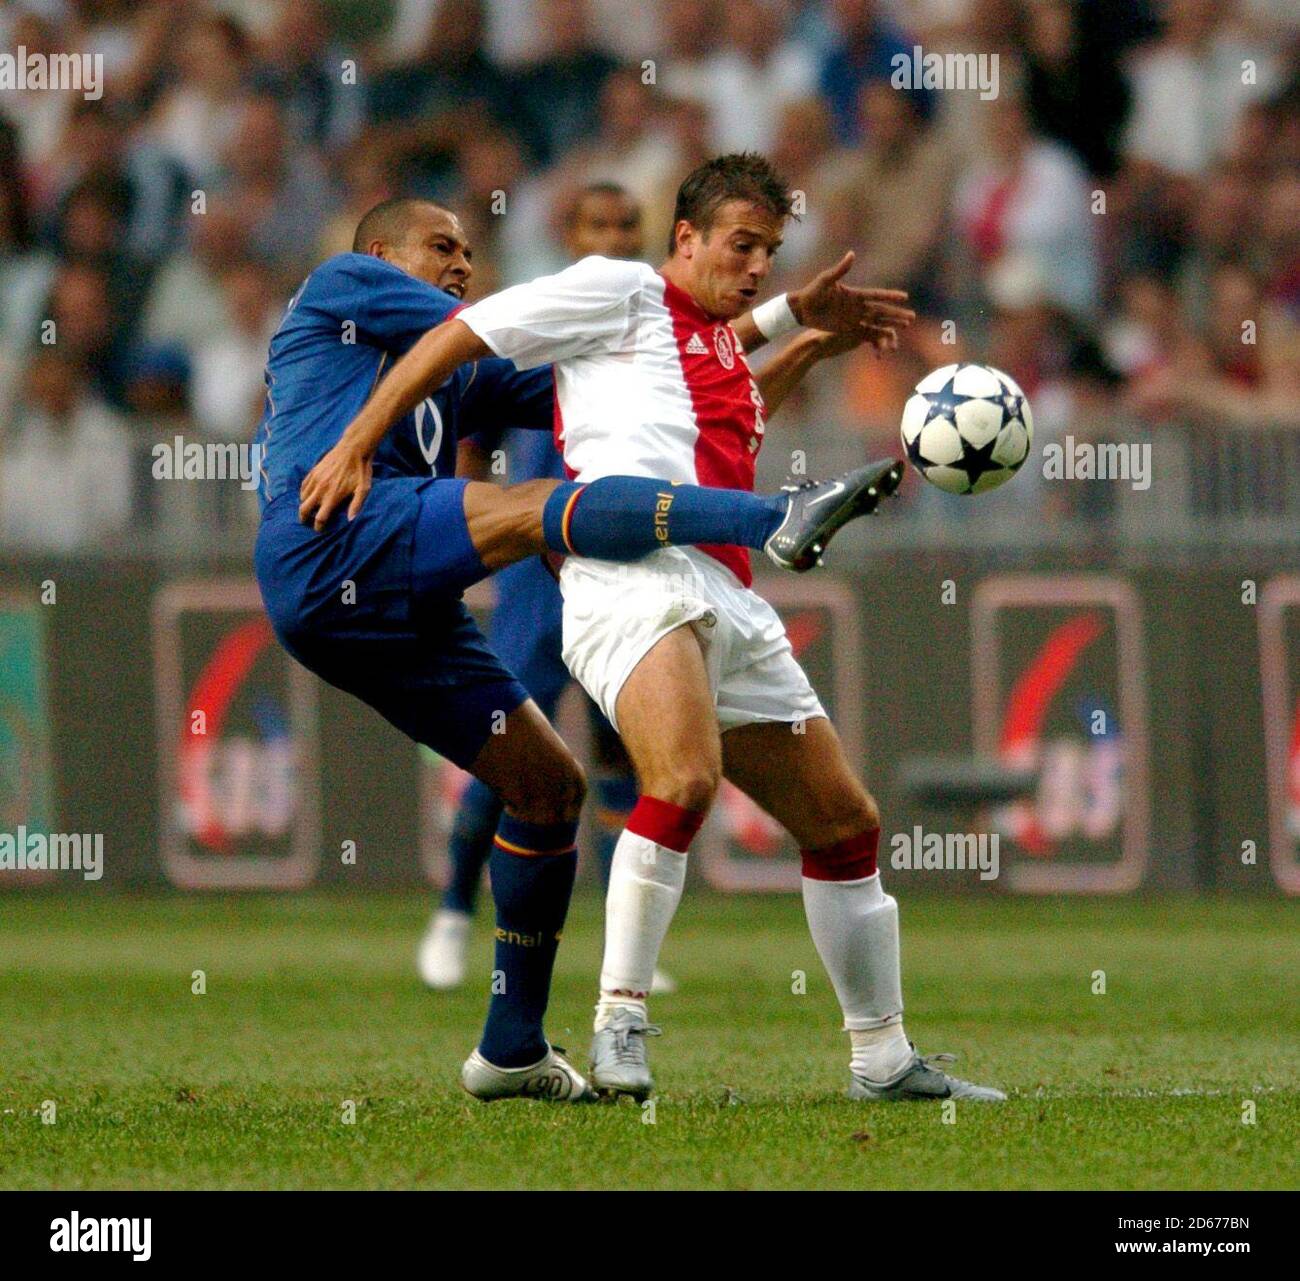 Ajax's Rafael van der Vaart is tackled by Arsenal's Gilberto Silva Stock Photo